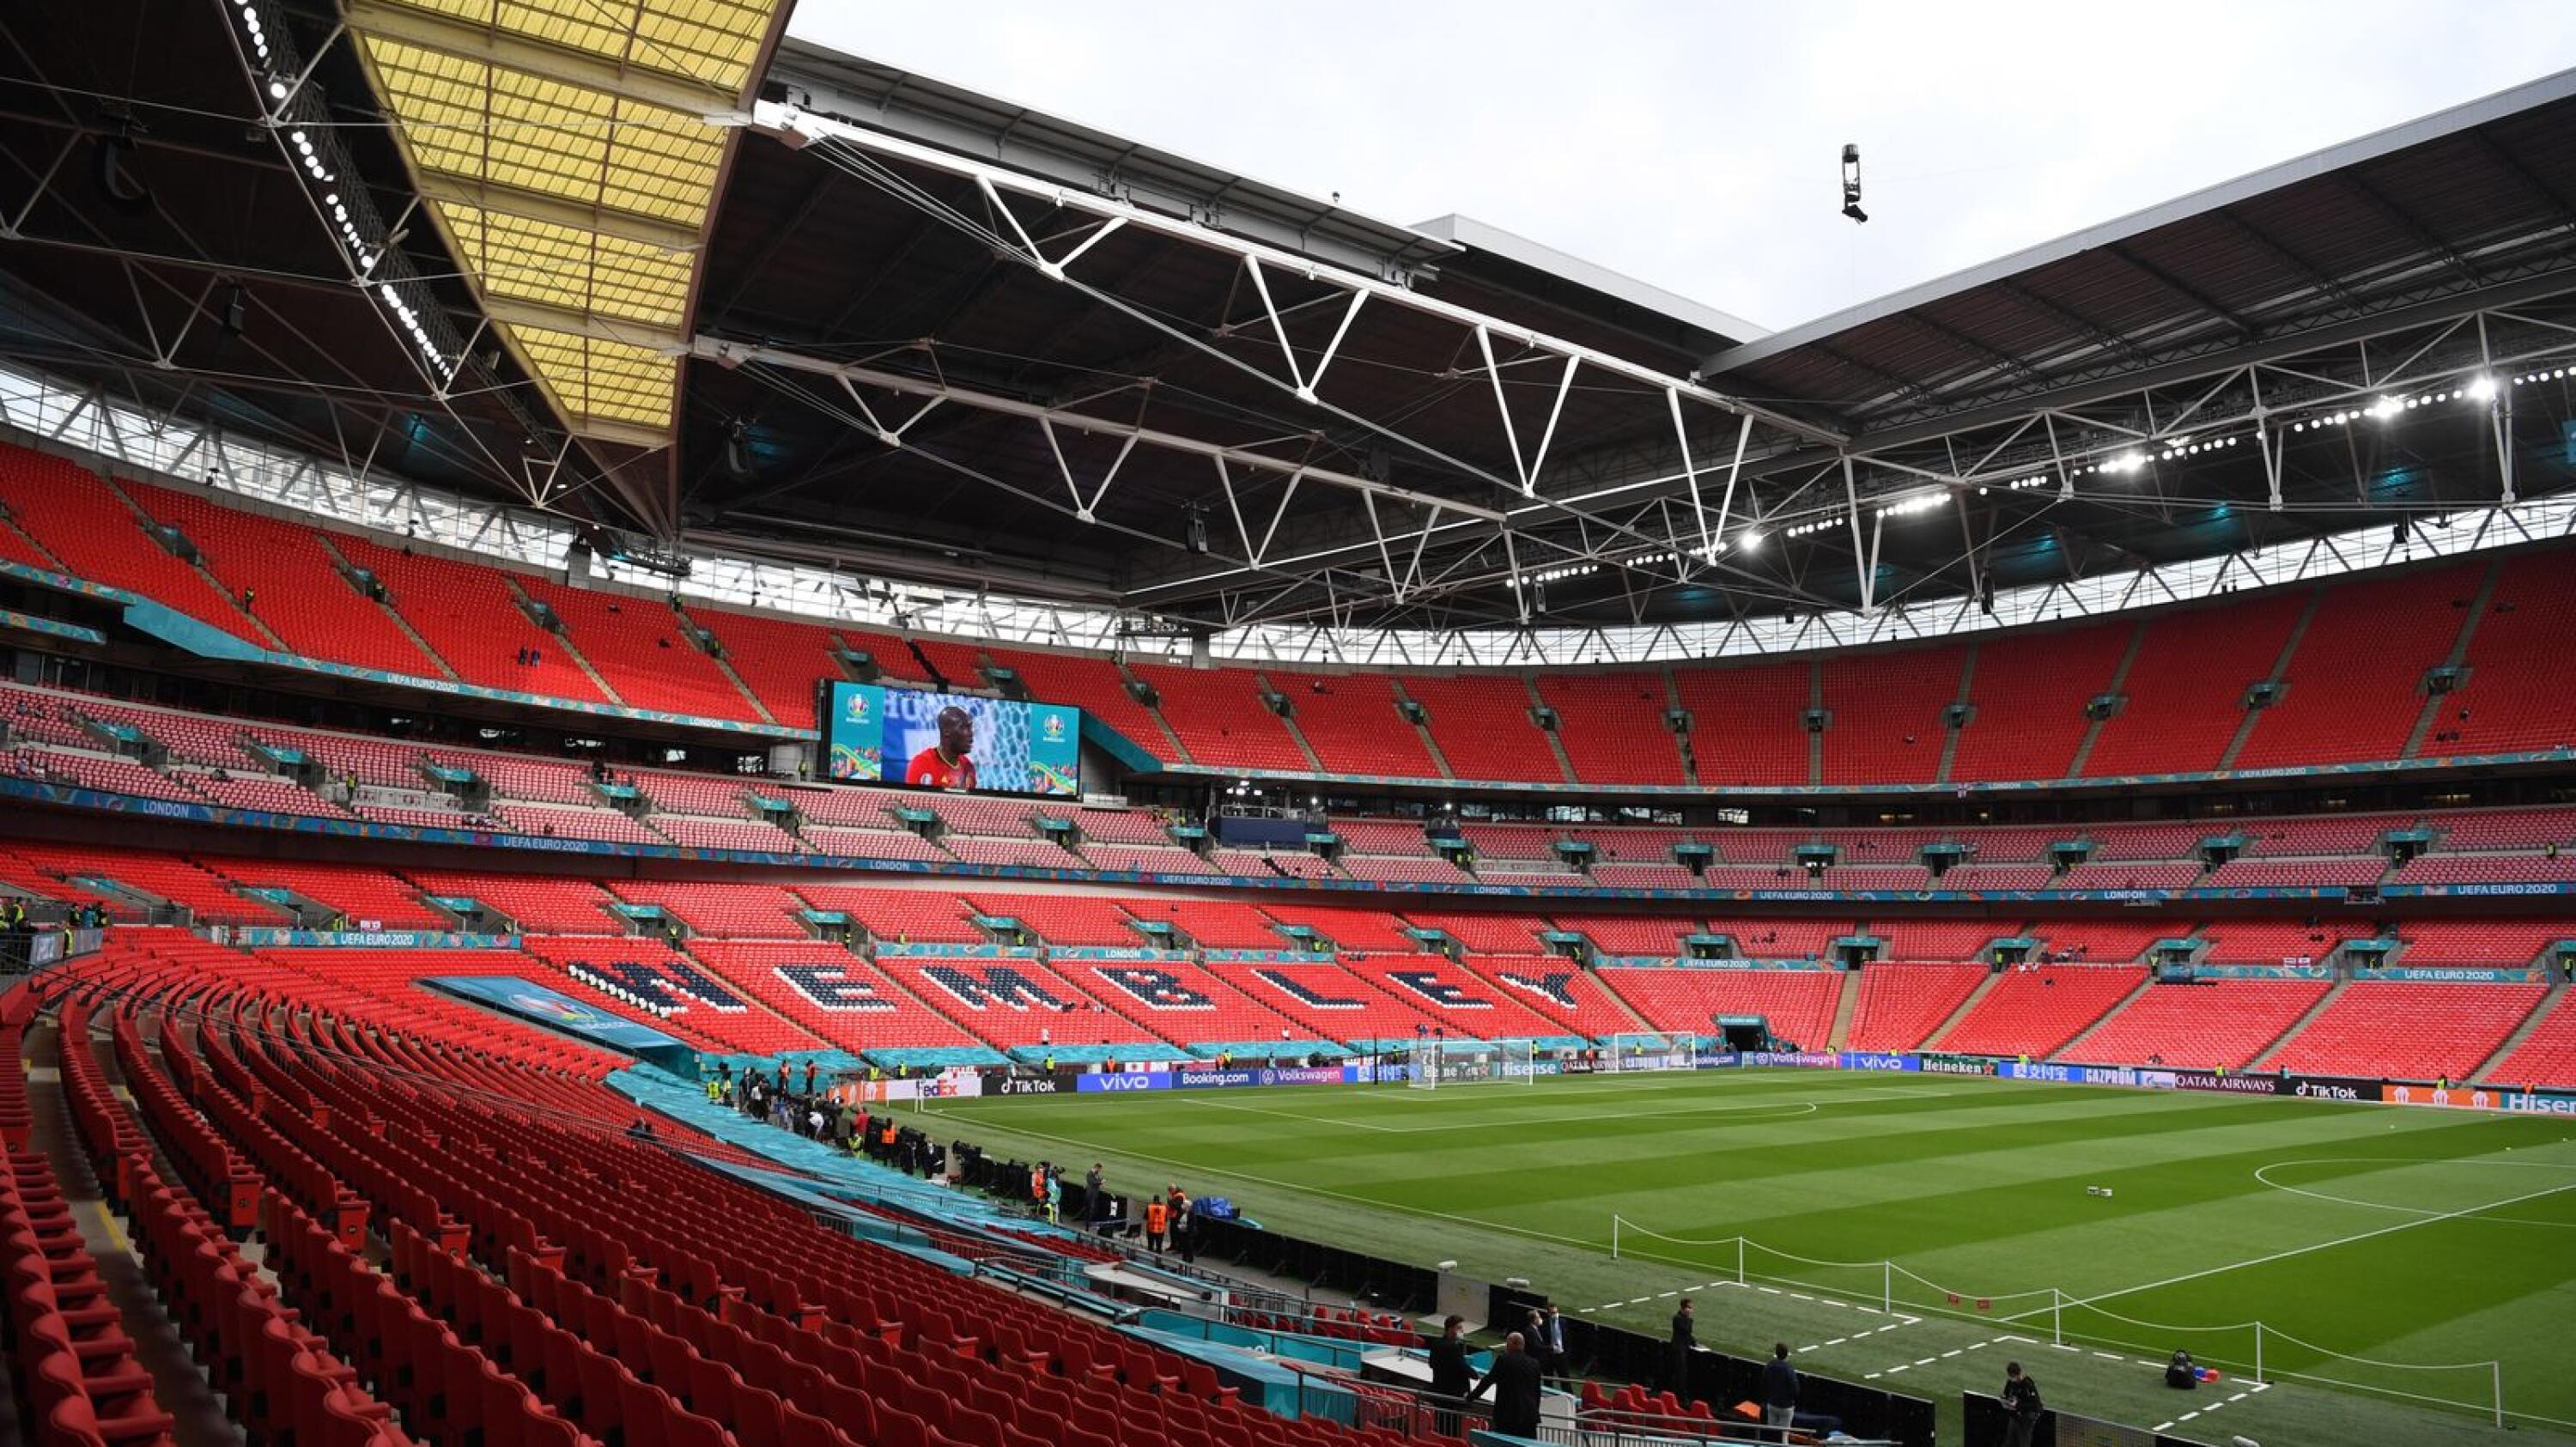 General view inside Wembley Stadium